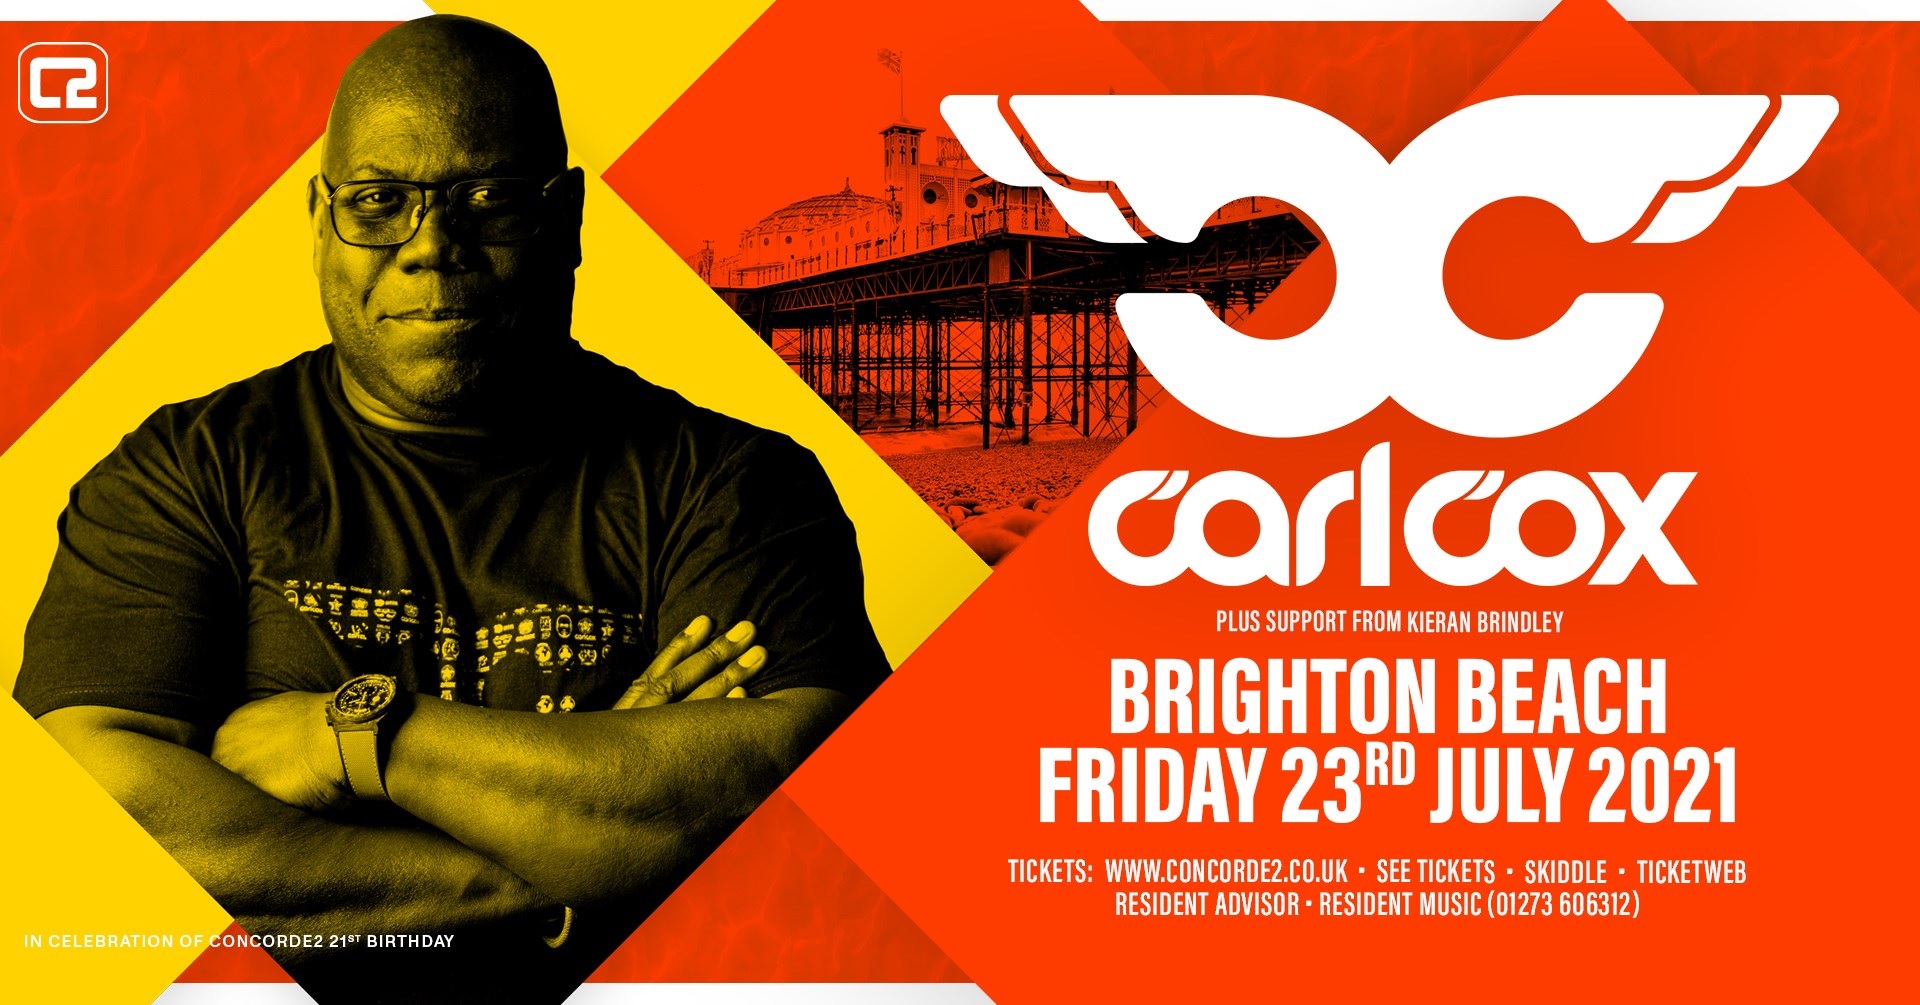 Carl Cox is back! Brighton Beach event announced! Brighton and Hove News